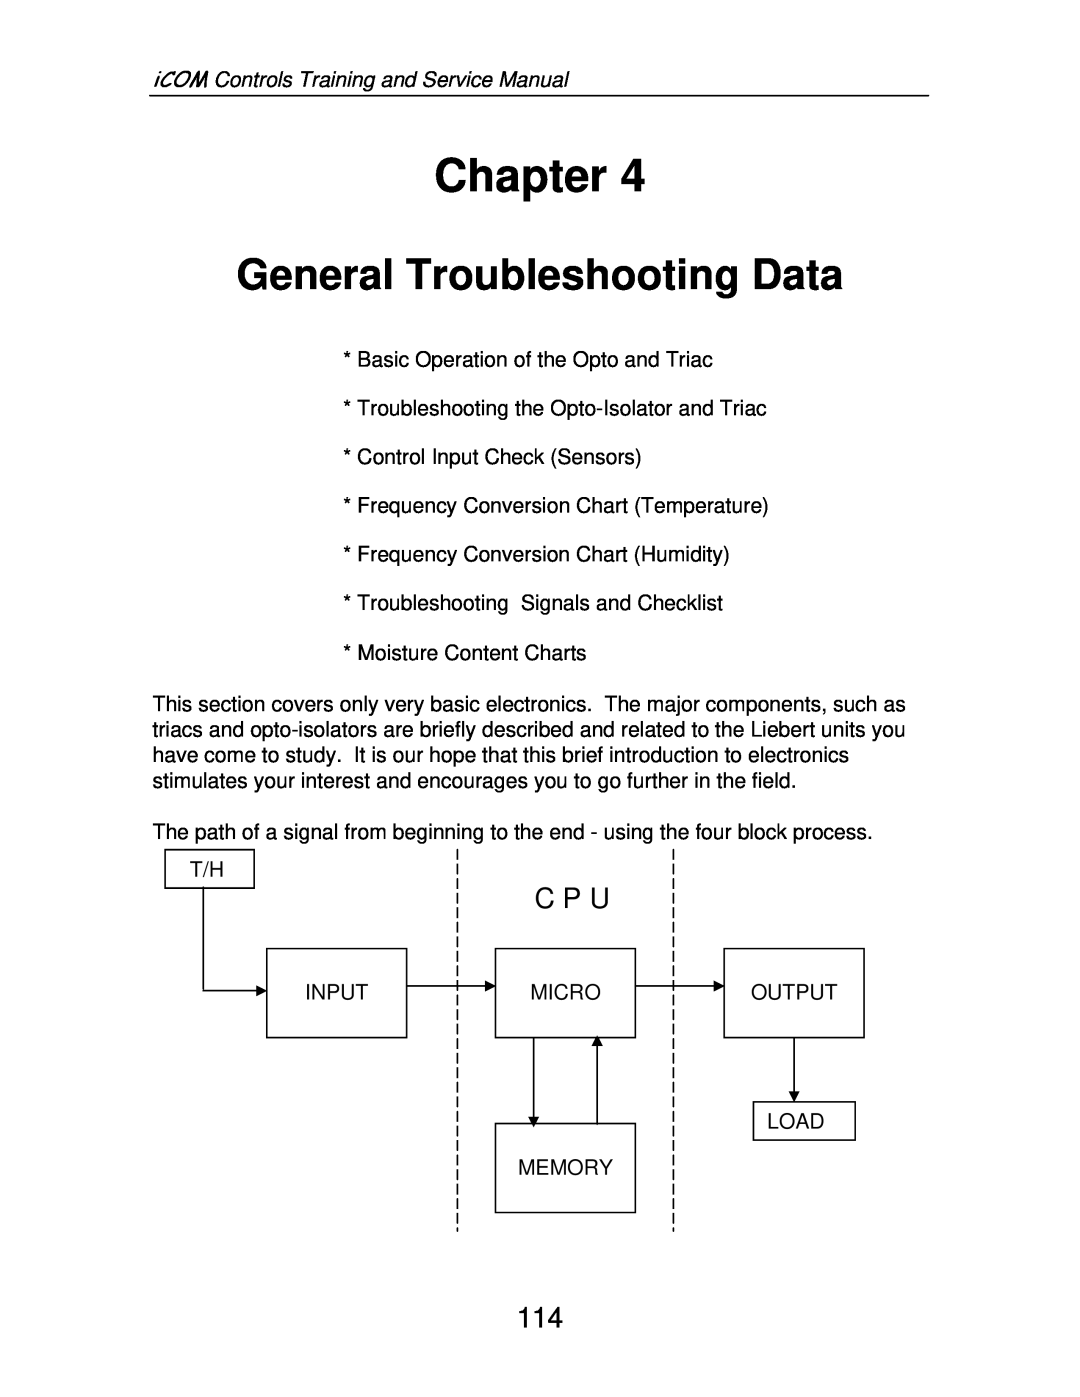 Liebert TM-10098 service manual Chapter, General Troubleshooting Data, C P U, iCOM Controls Training and Service Manual 